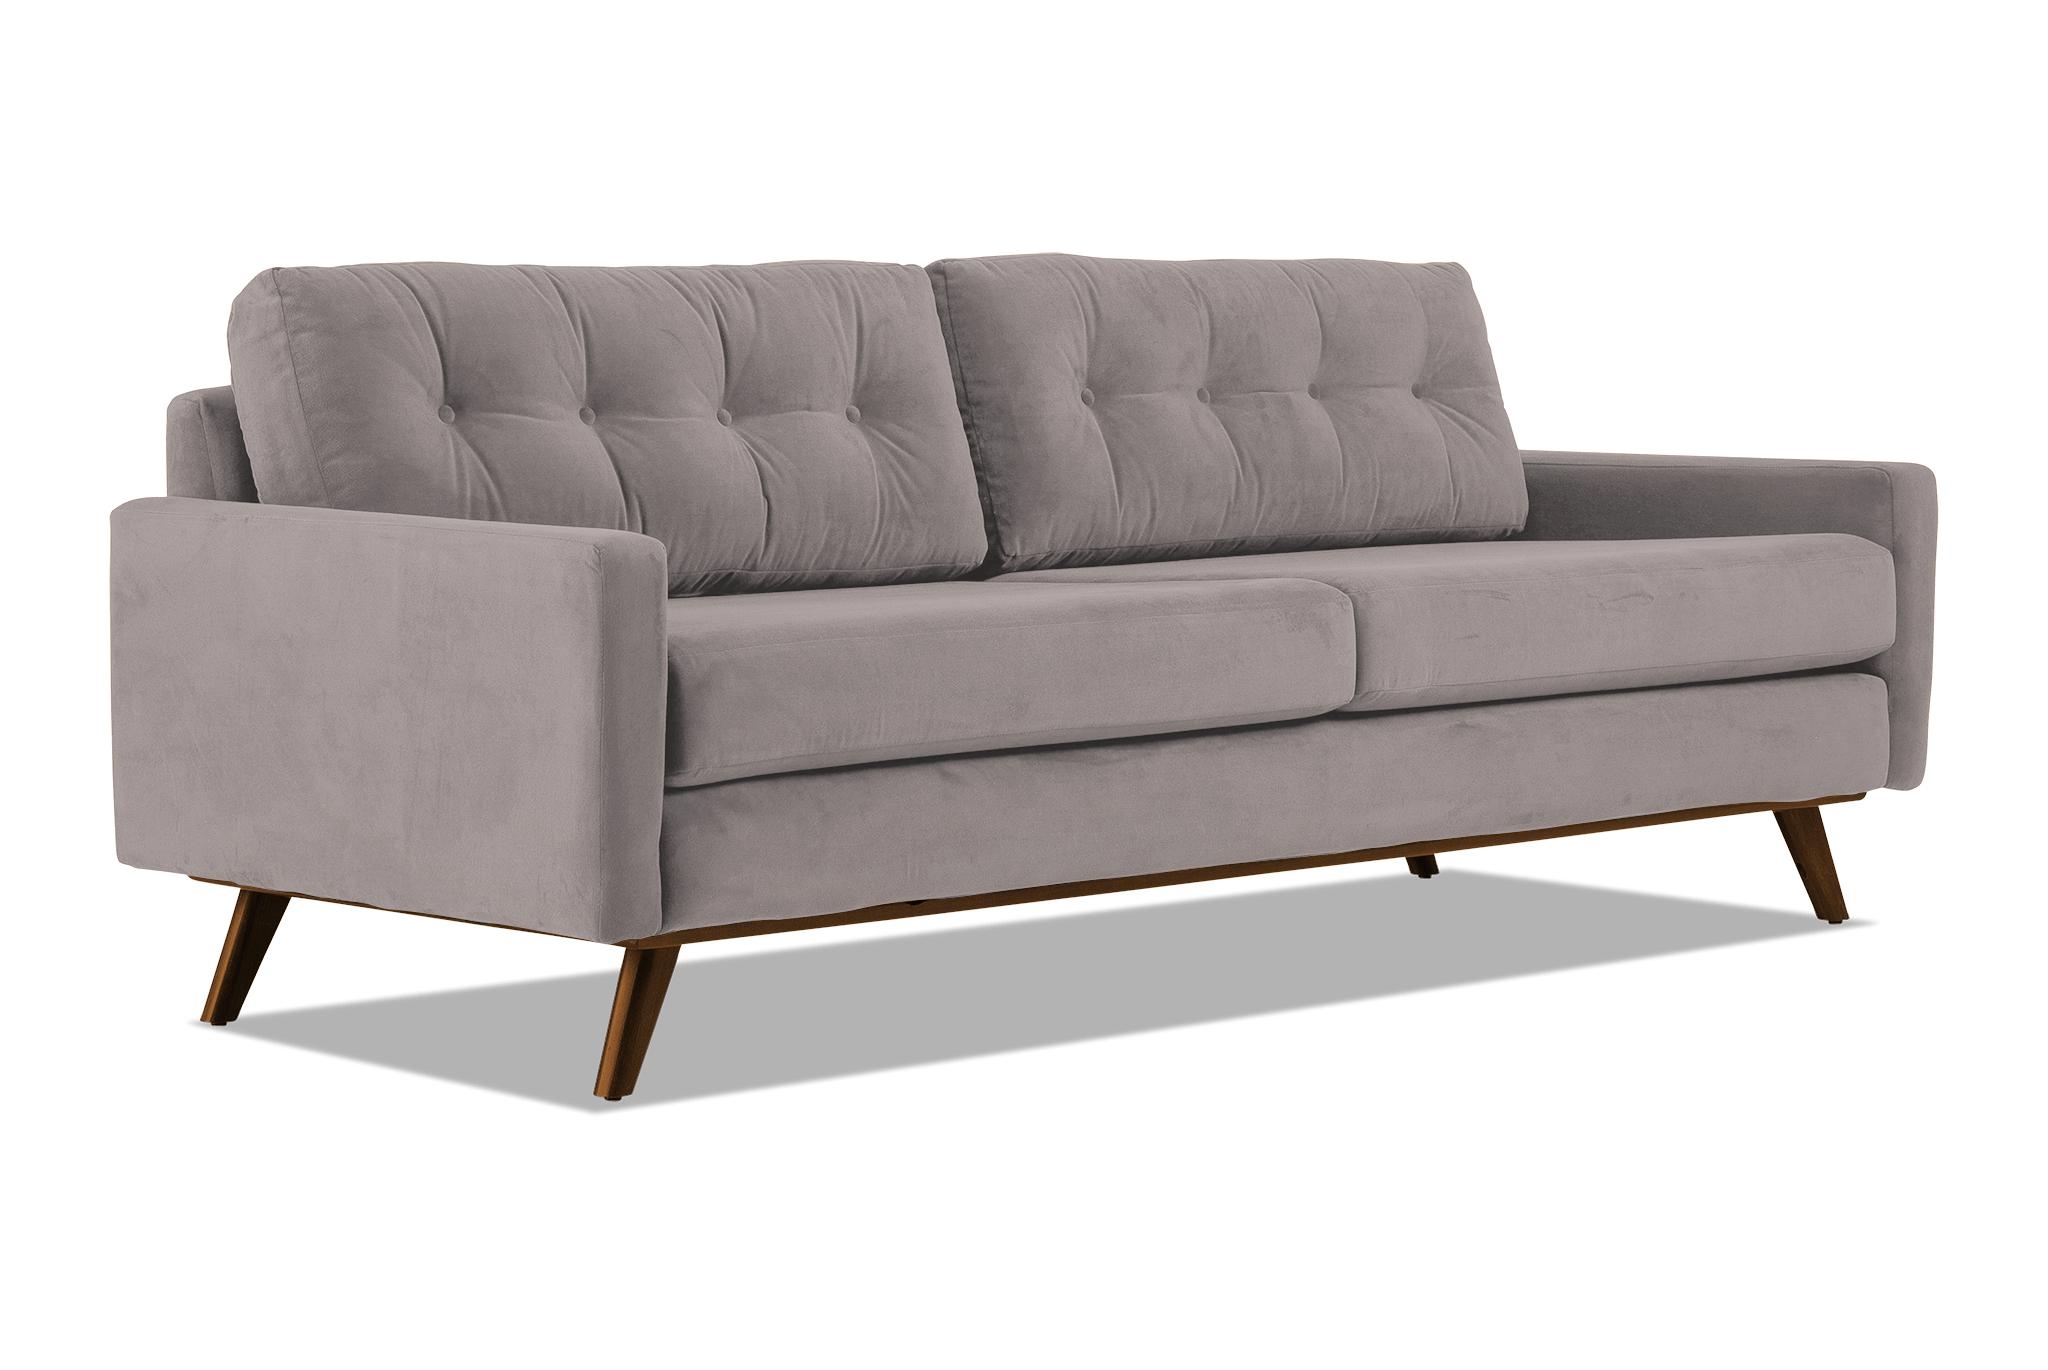 Purple Hopson Mid Century Modern Sofa - Sunbrella Premier Wisteria - Mocha - Image 1